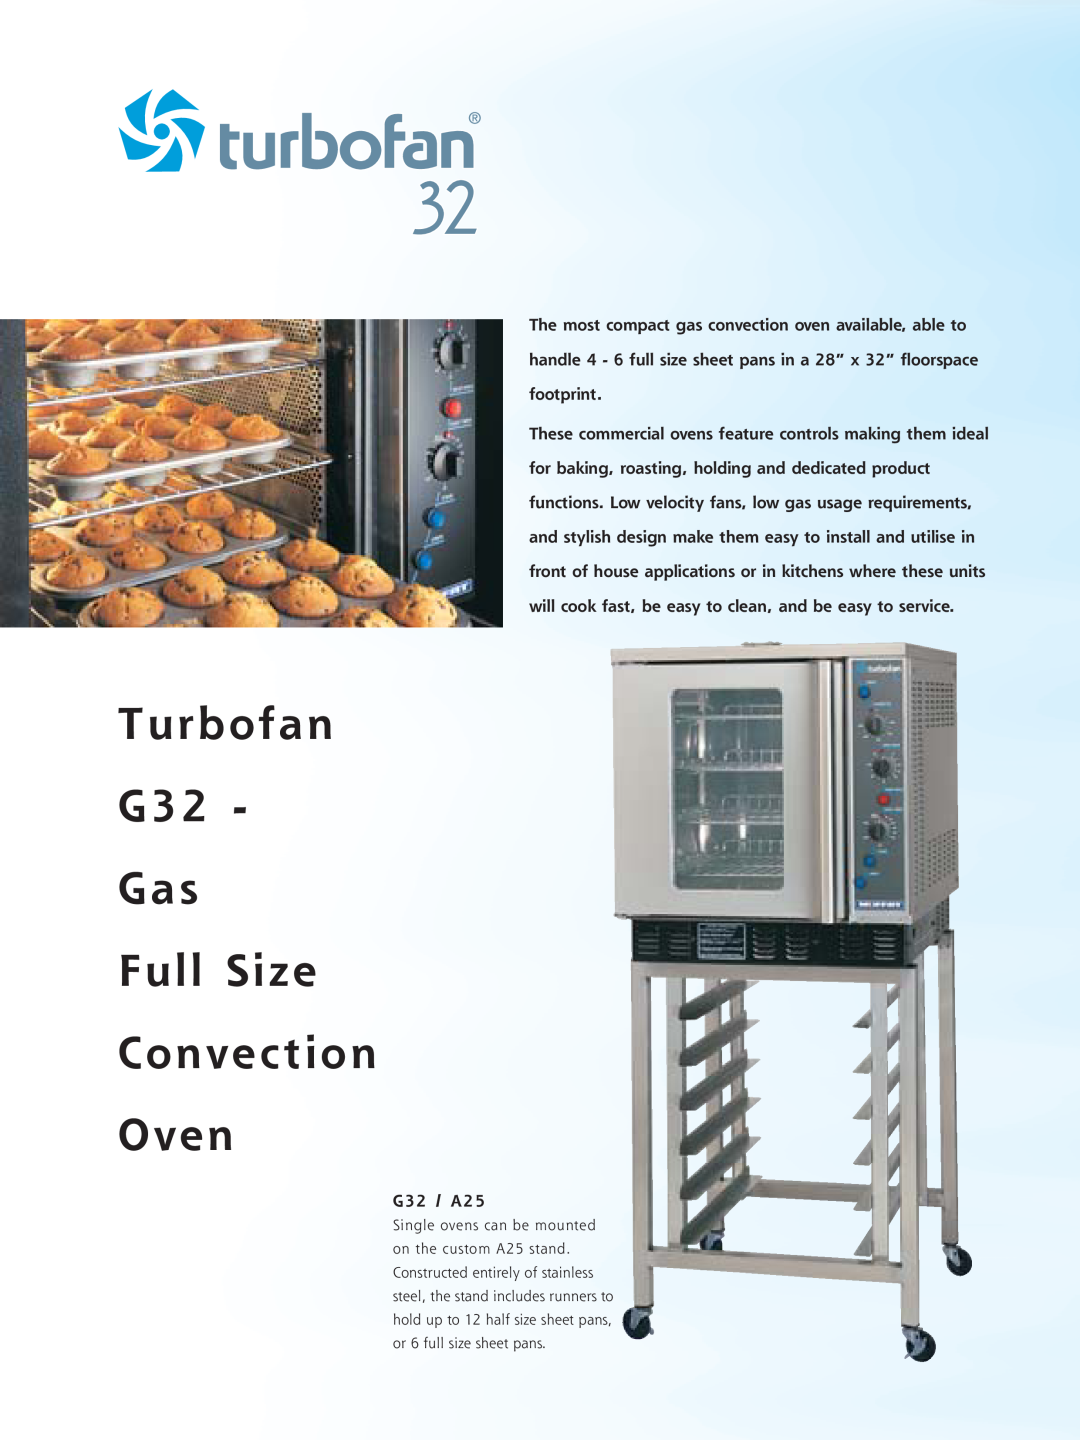 Moffat E25 manual Turbofan G32 Gas Full Size Convection Oven 